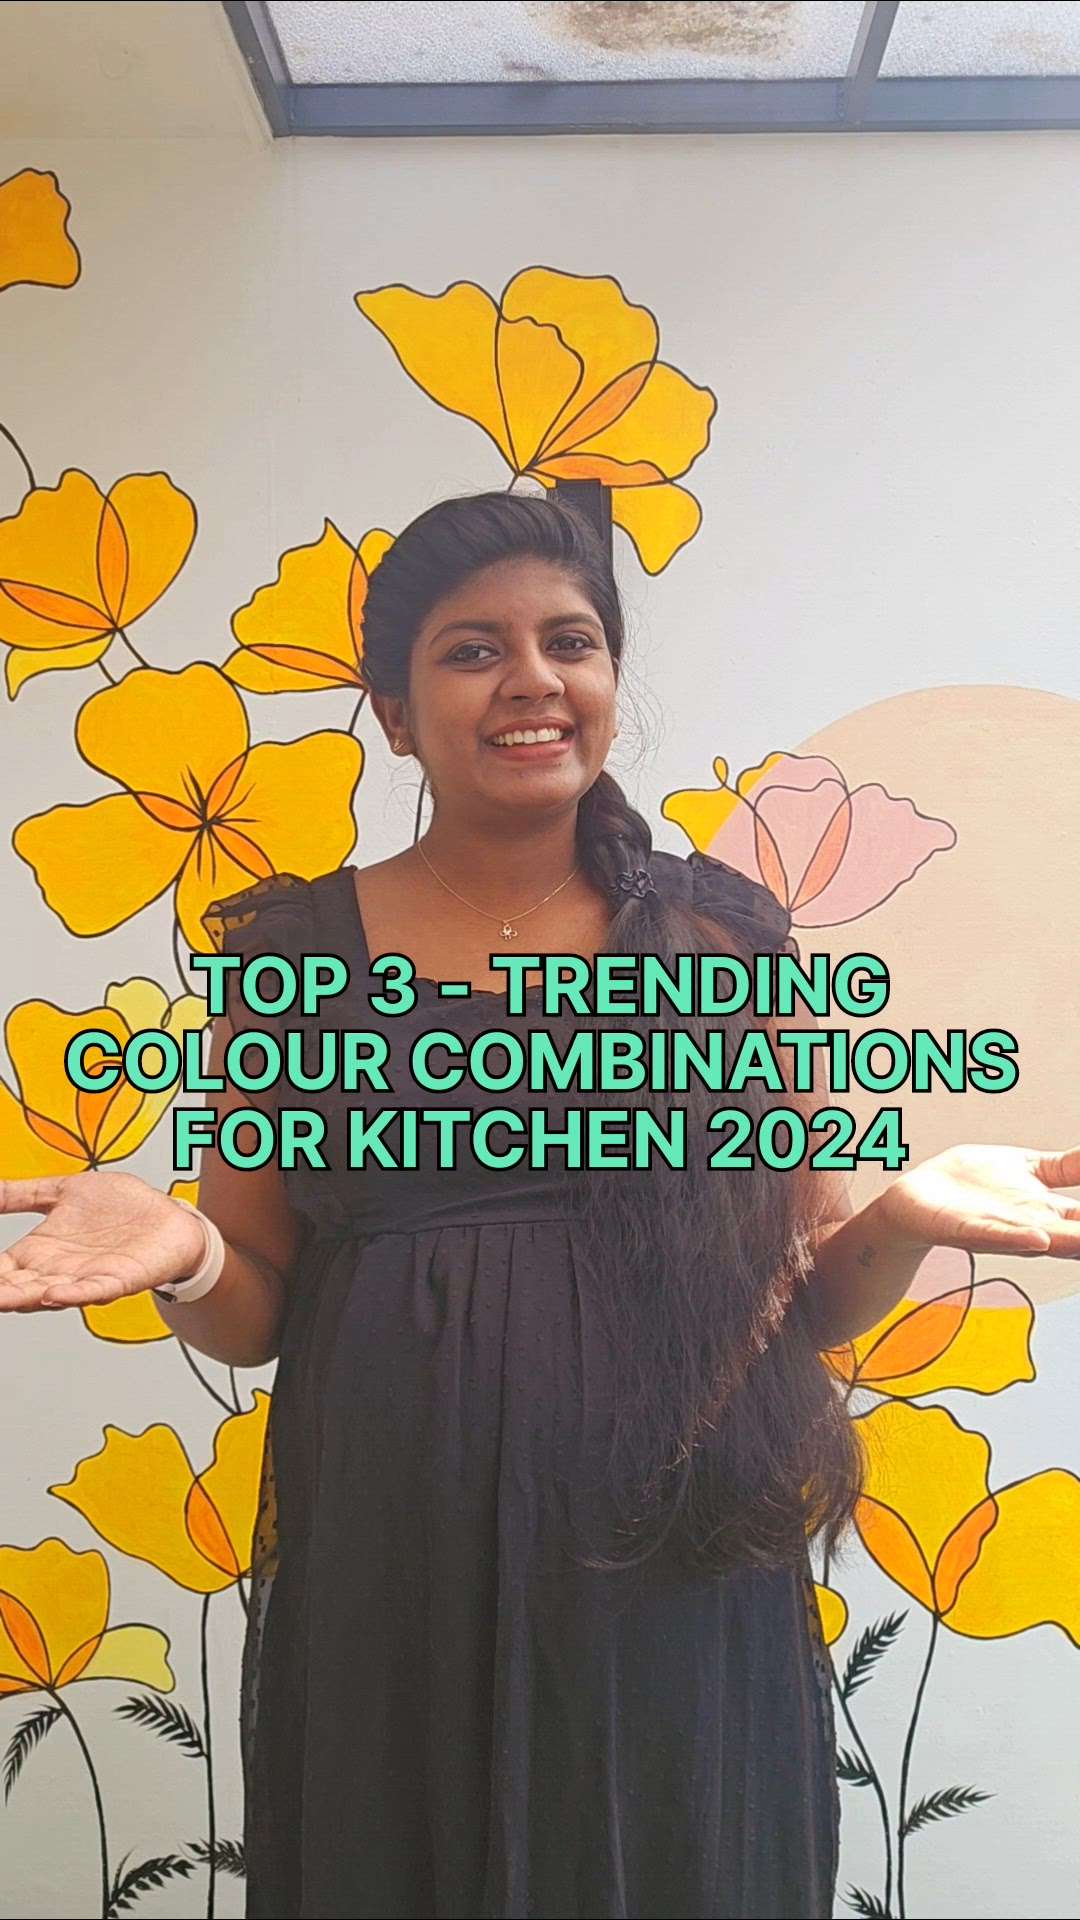 Top 3 kitchen colour combinations 2024
#creatorsofkolo #top3 ##kitchenideas #modernhomes #ideas #kitchen #tips #arya #prevoirarchitects